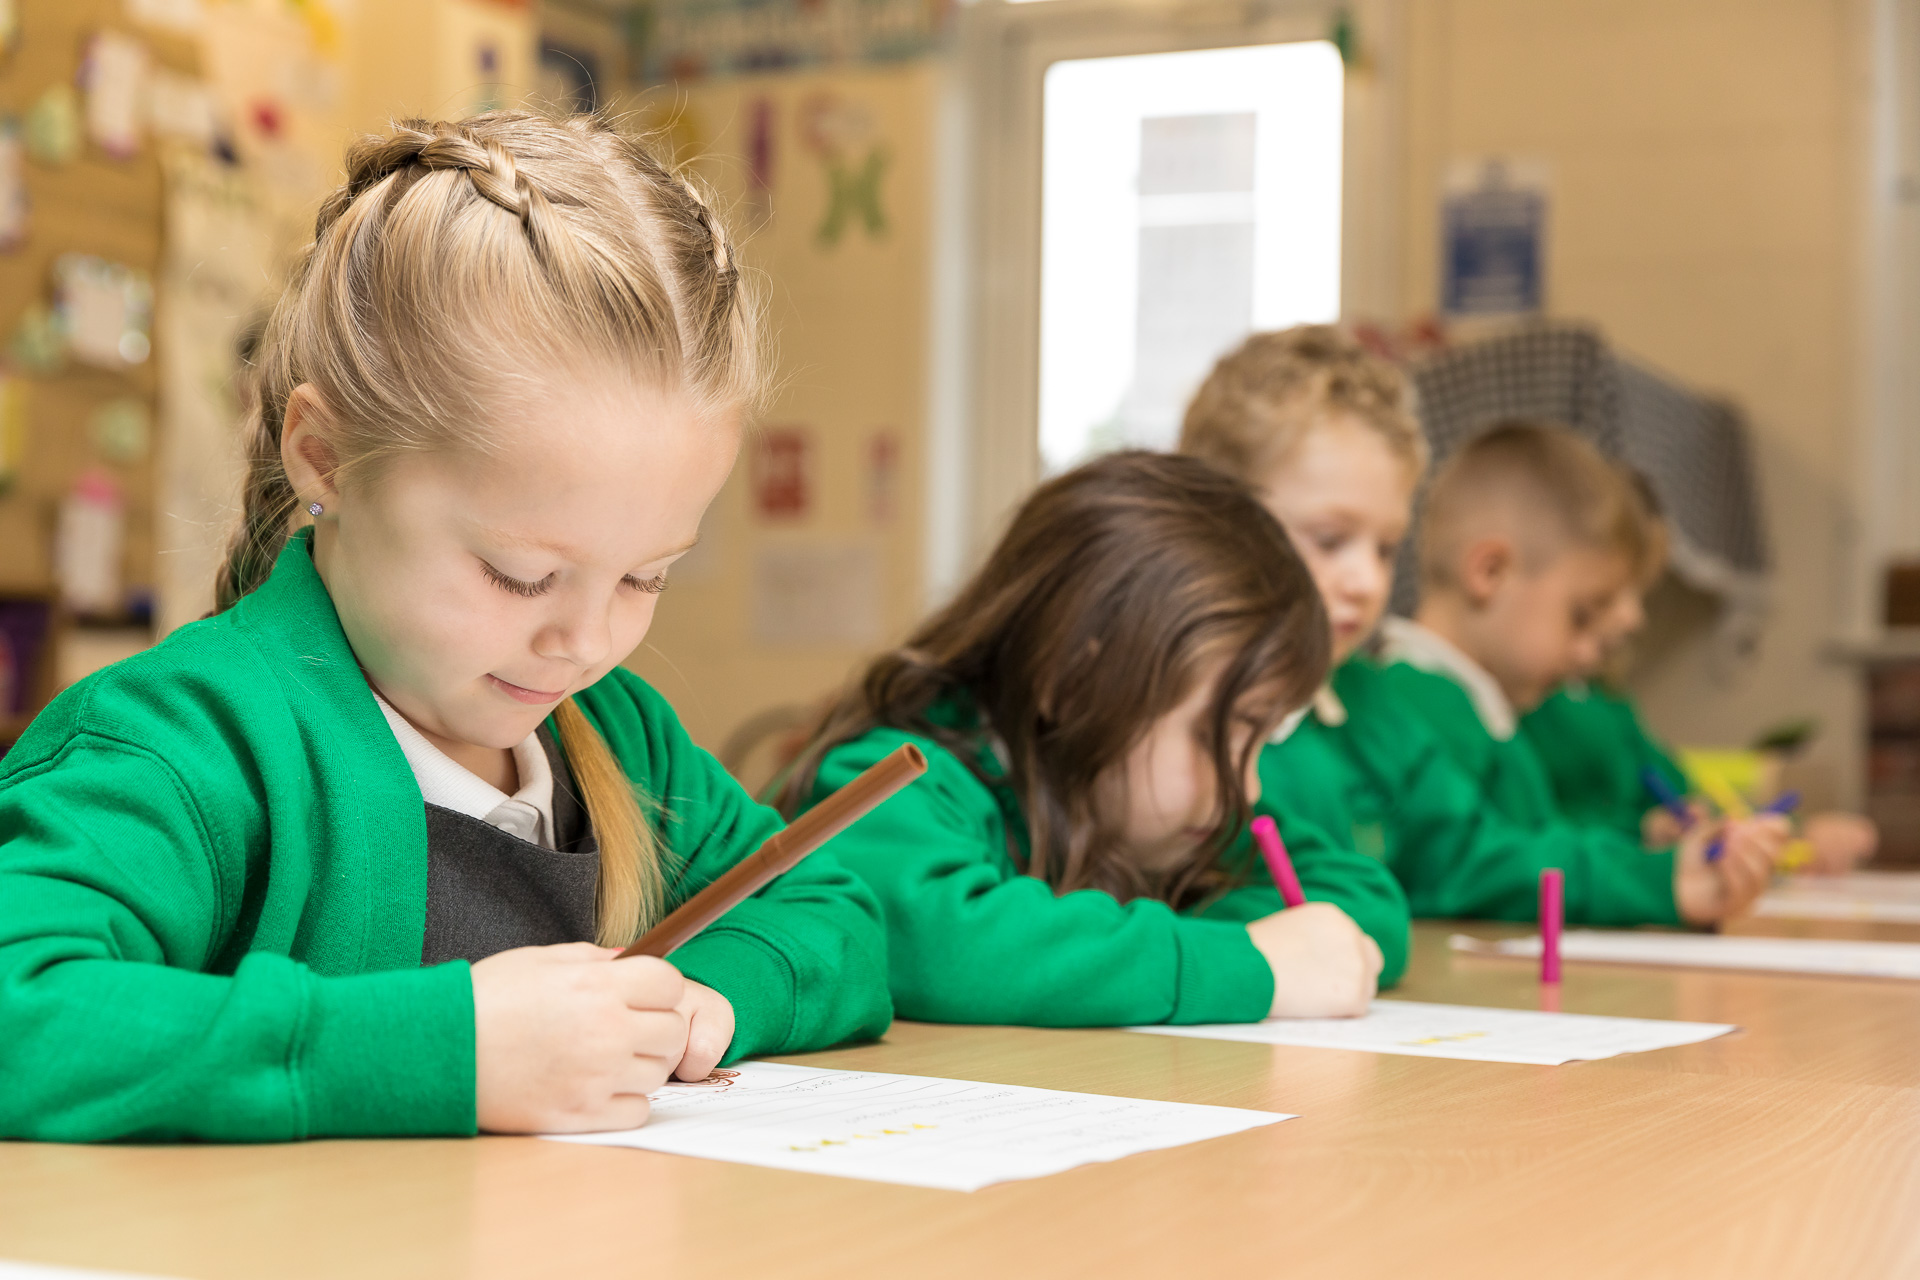 Greenvale Primary School - ClassDigest.com - Find best preschools ...